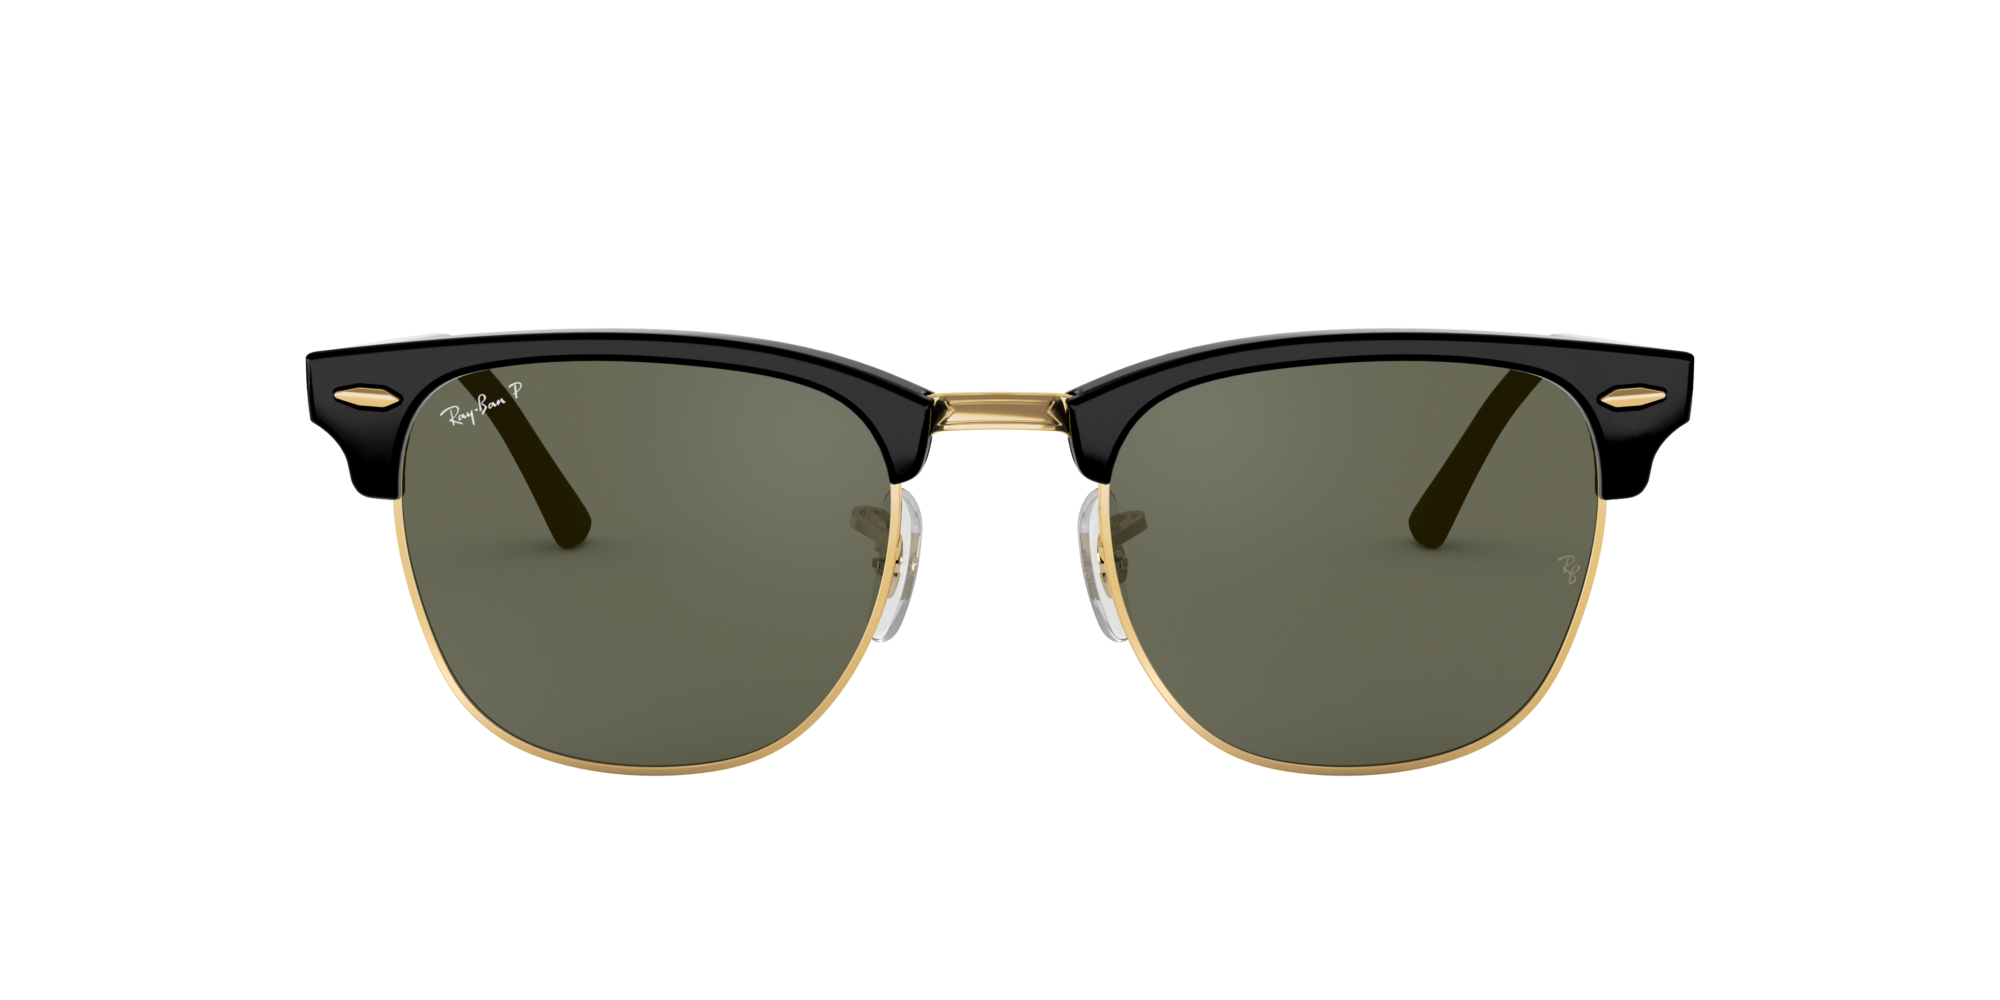 polarized clubmaster sunglasses